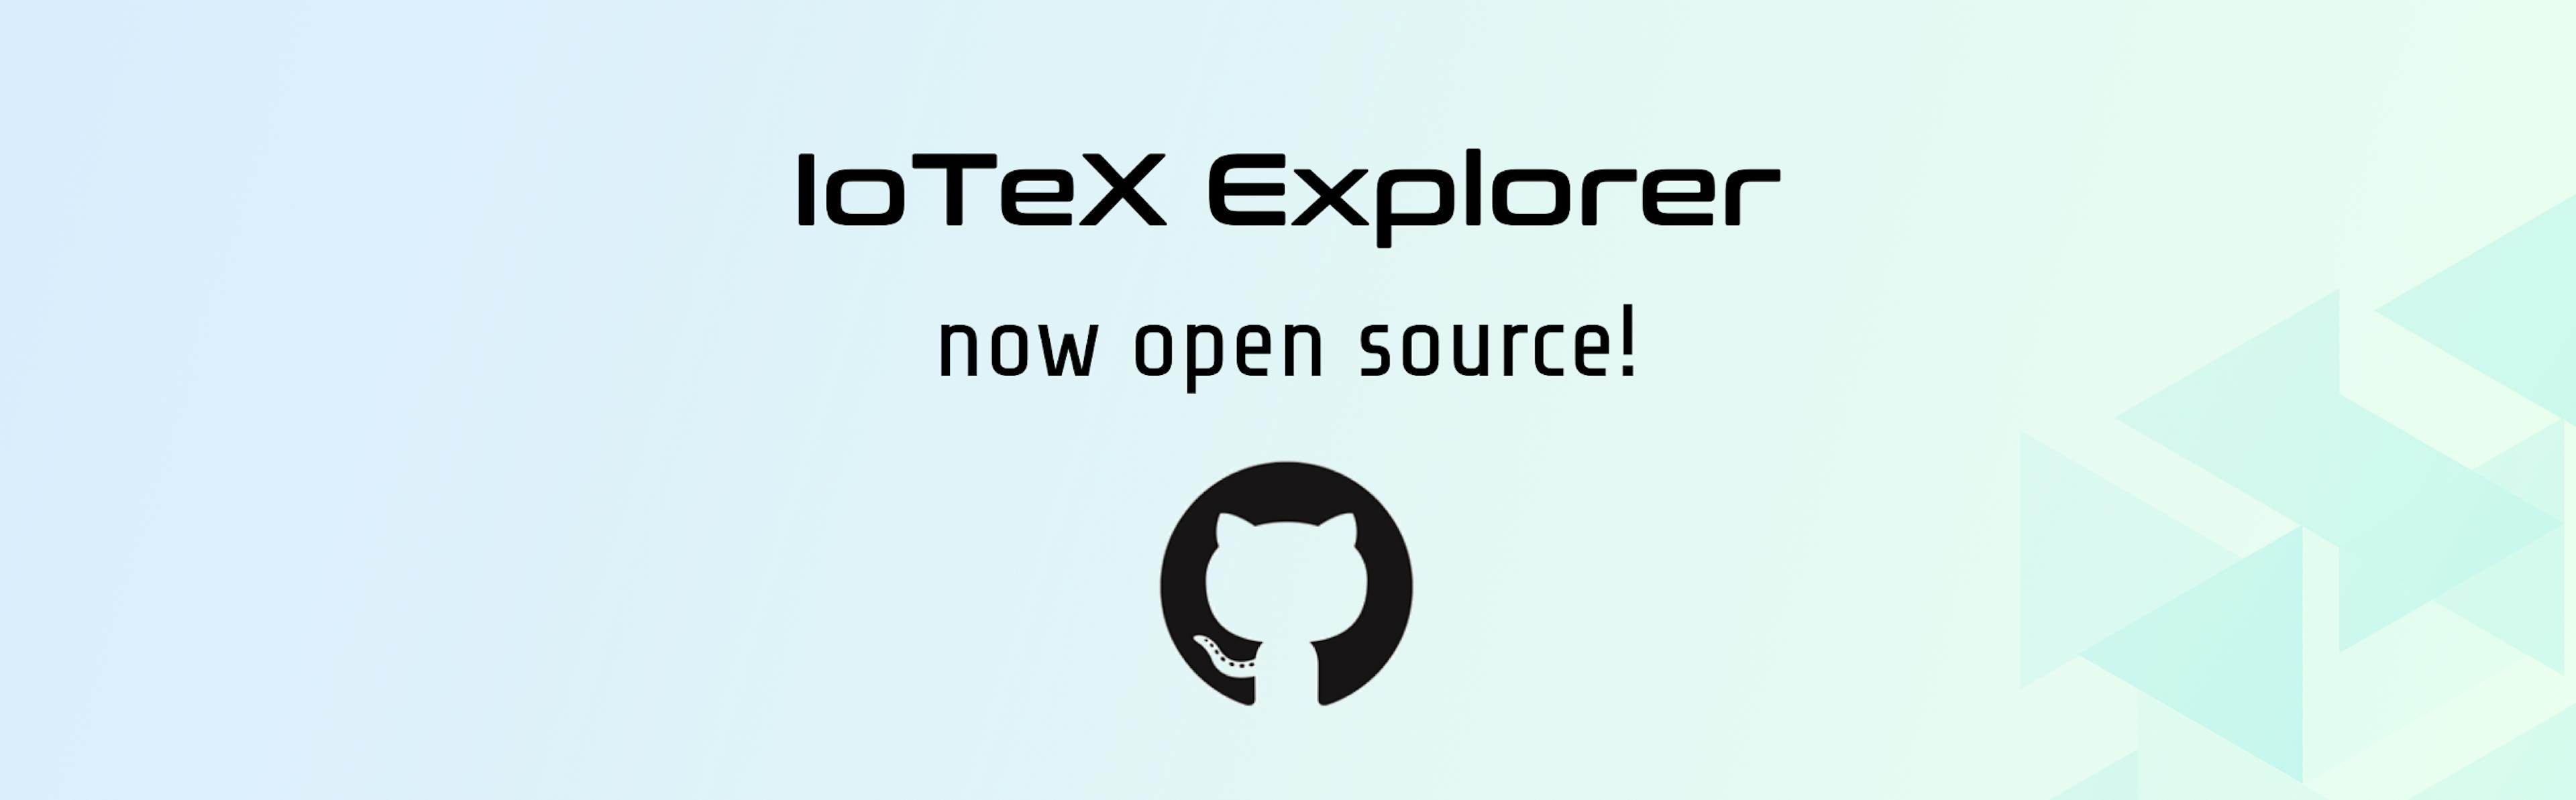 featured image - IoTeX Network Explorer has been Open Sourced!